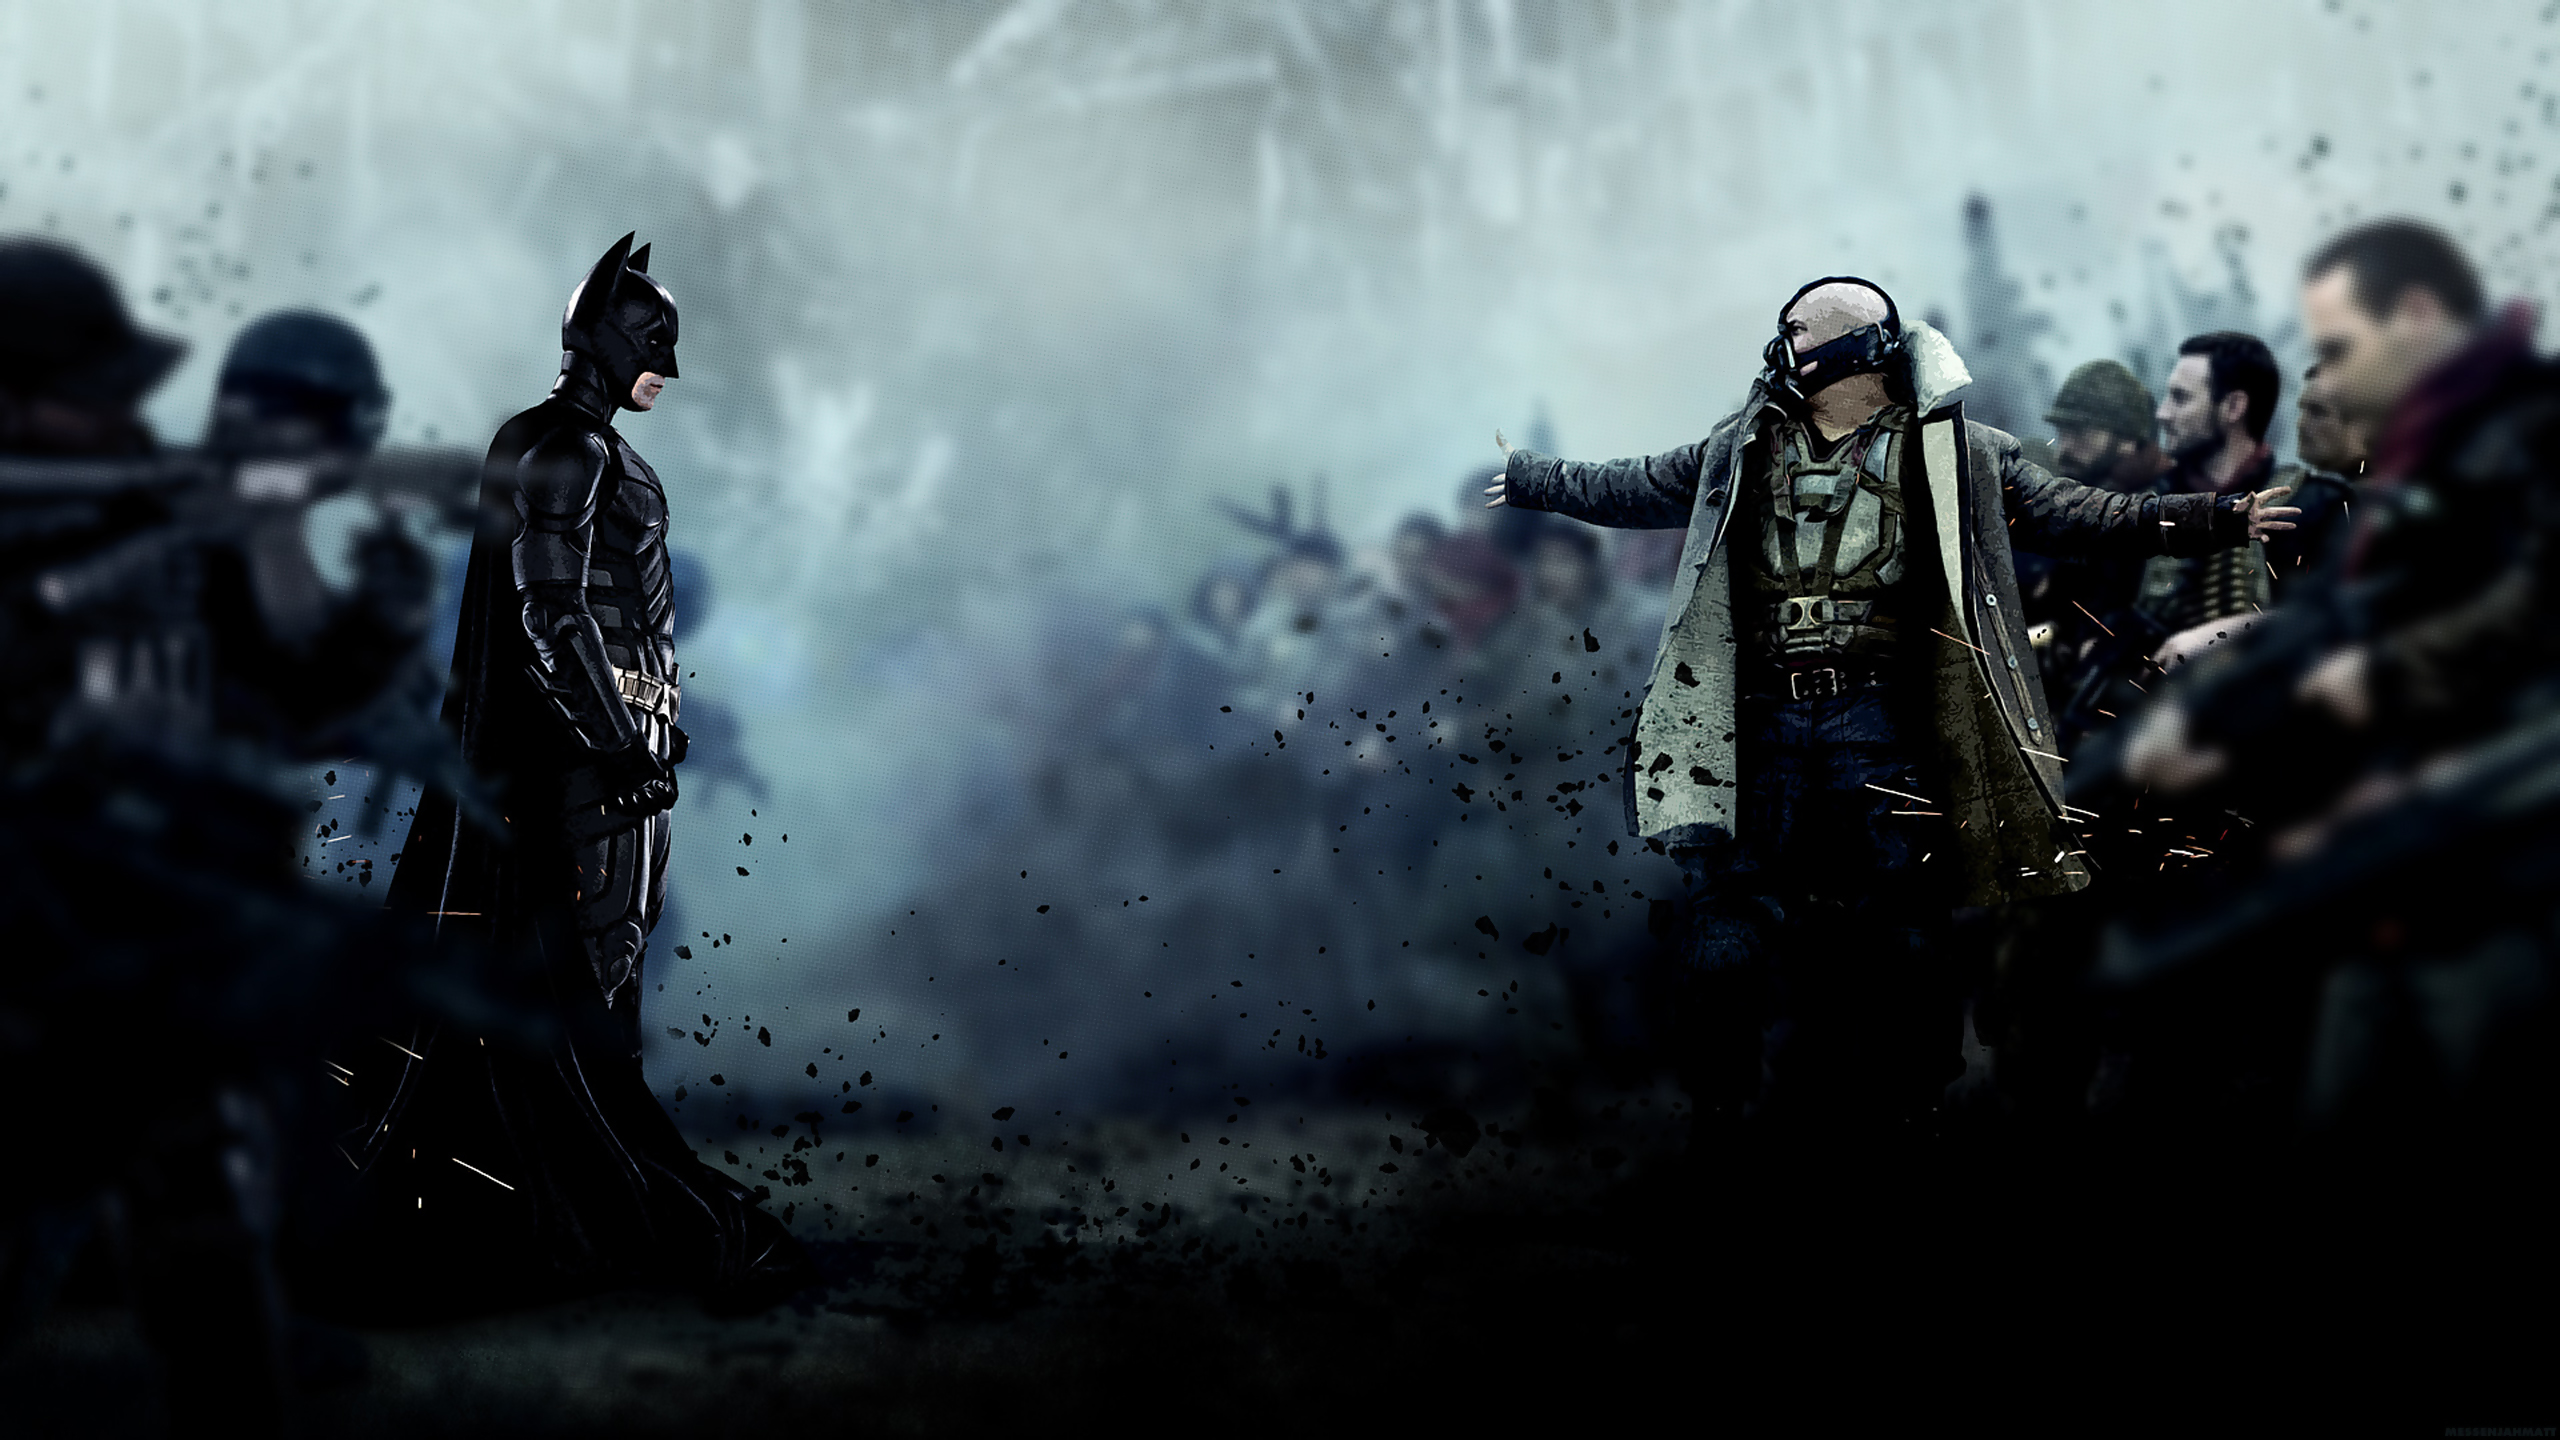 Wallpaper Bane Vs Batman The Dark Knight Rises Cinema